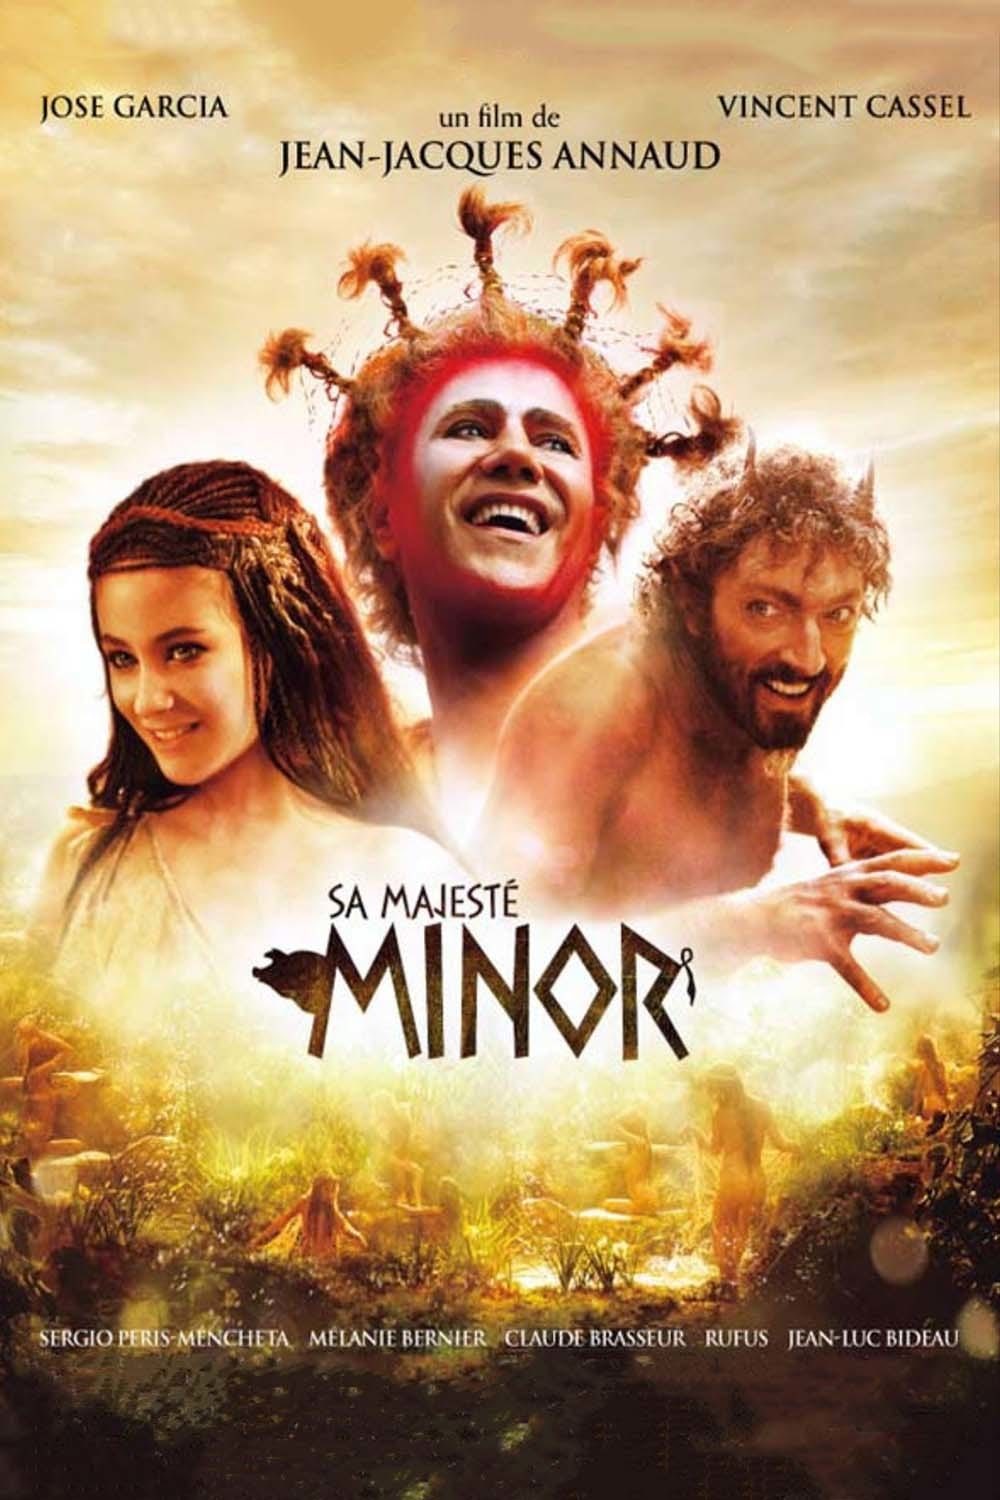 His Majesty Minor (2007)